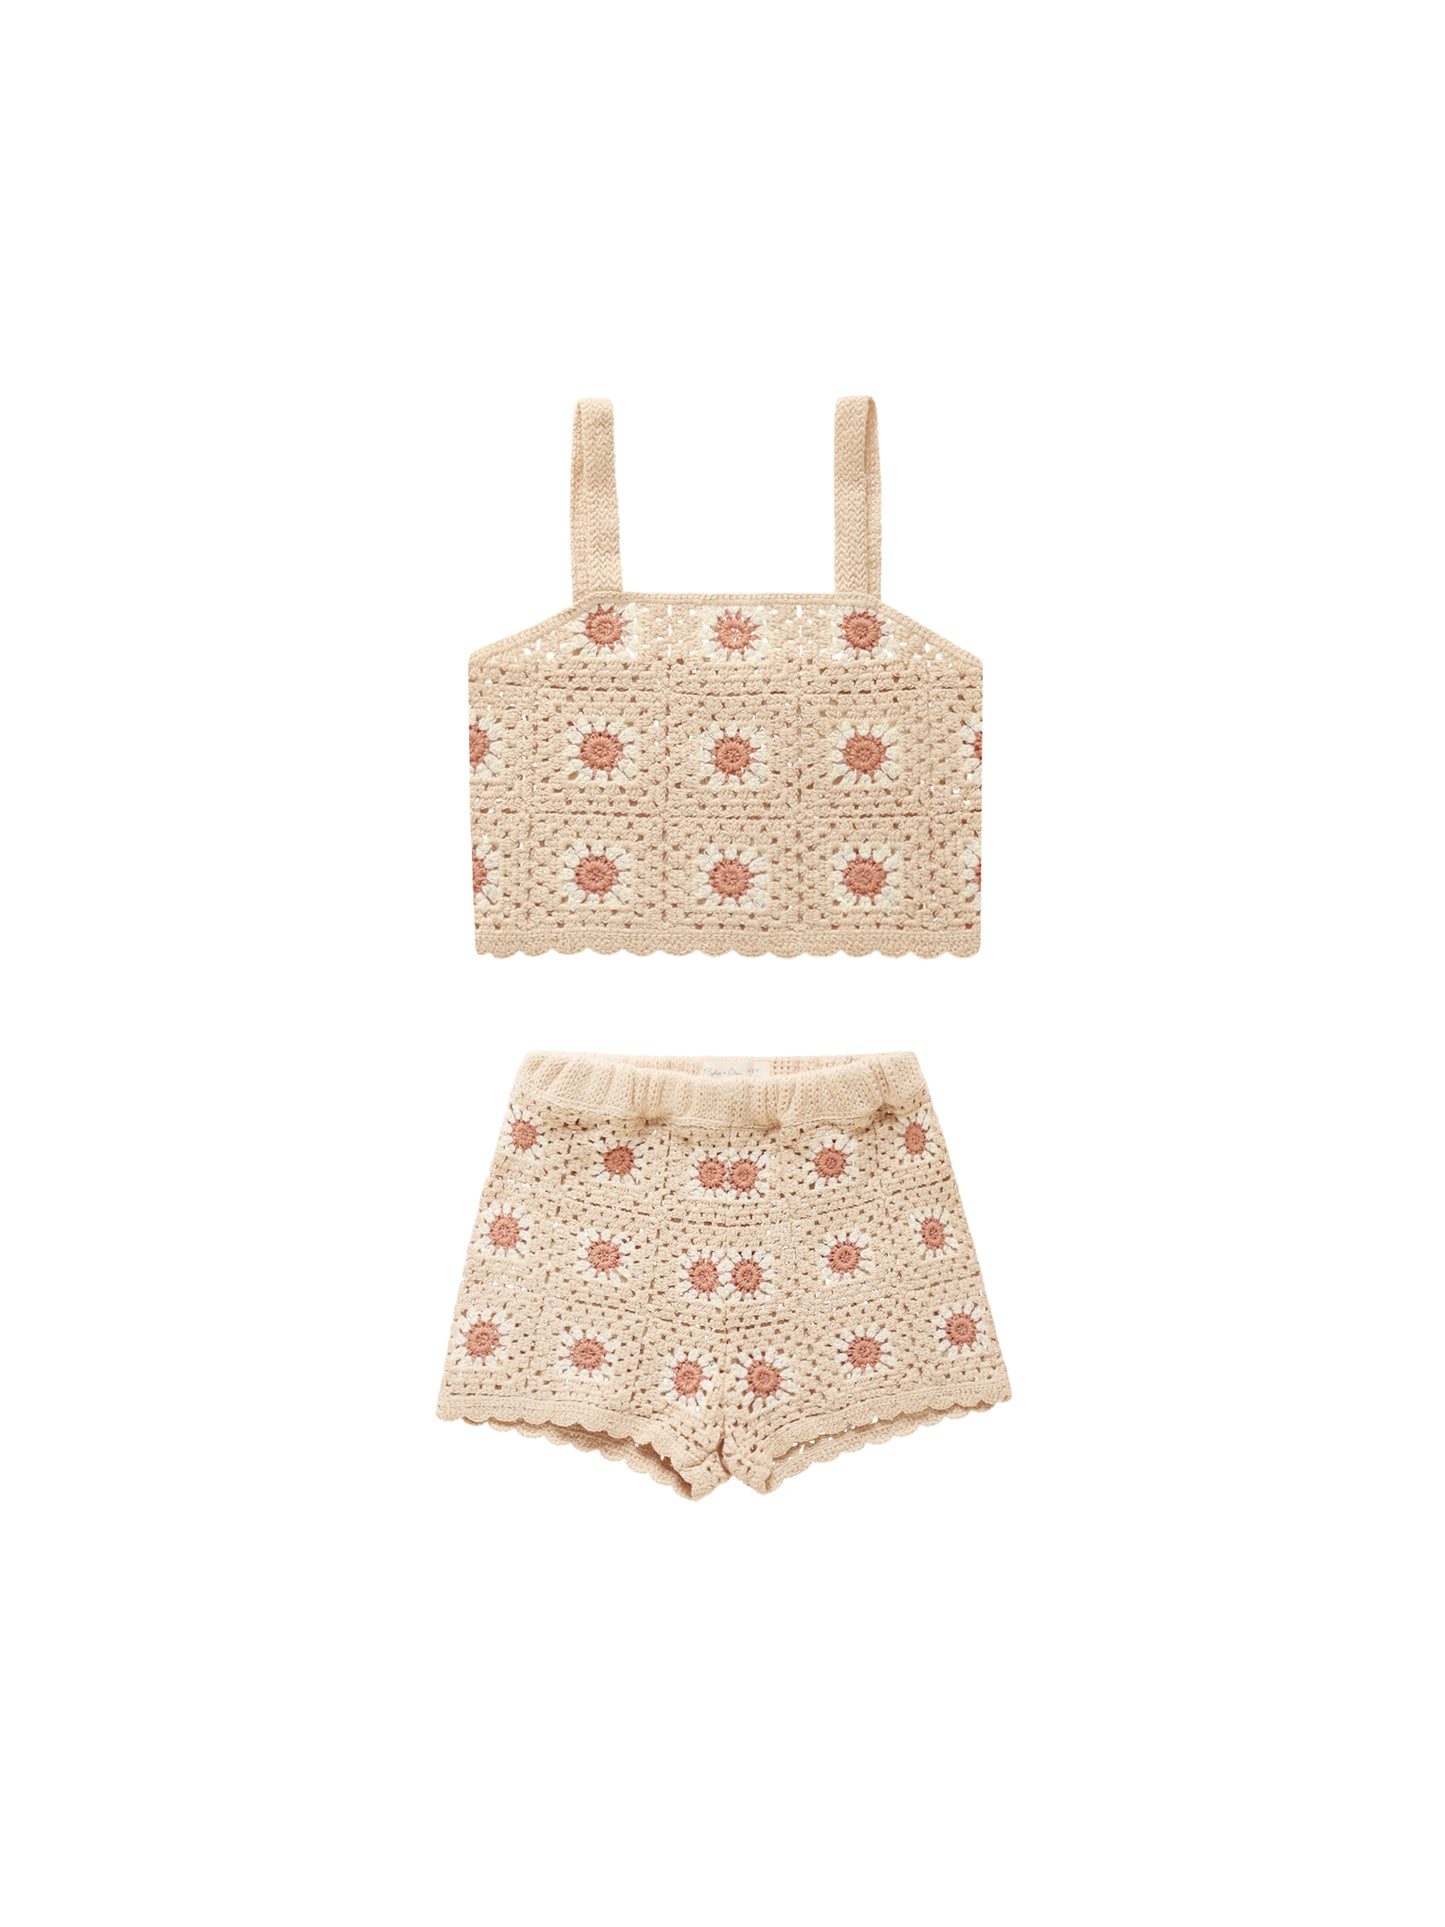 Rylee + Cru - Crochet Summer Set - Floral